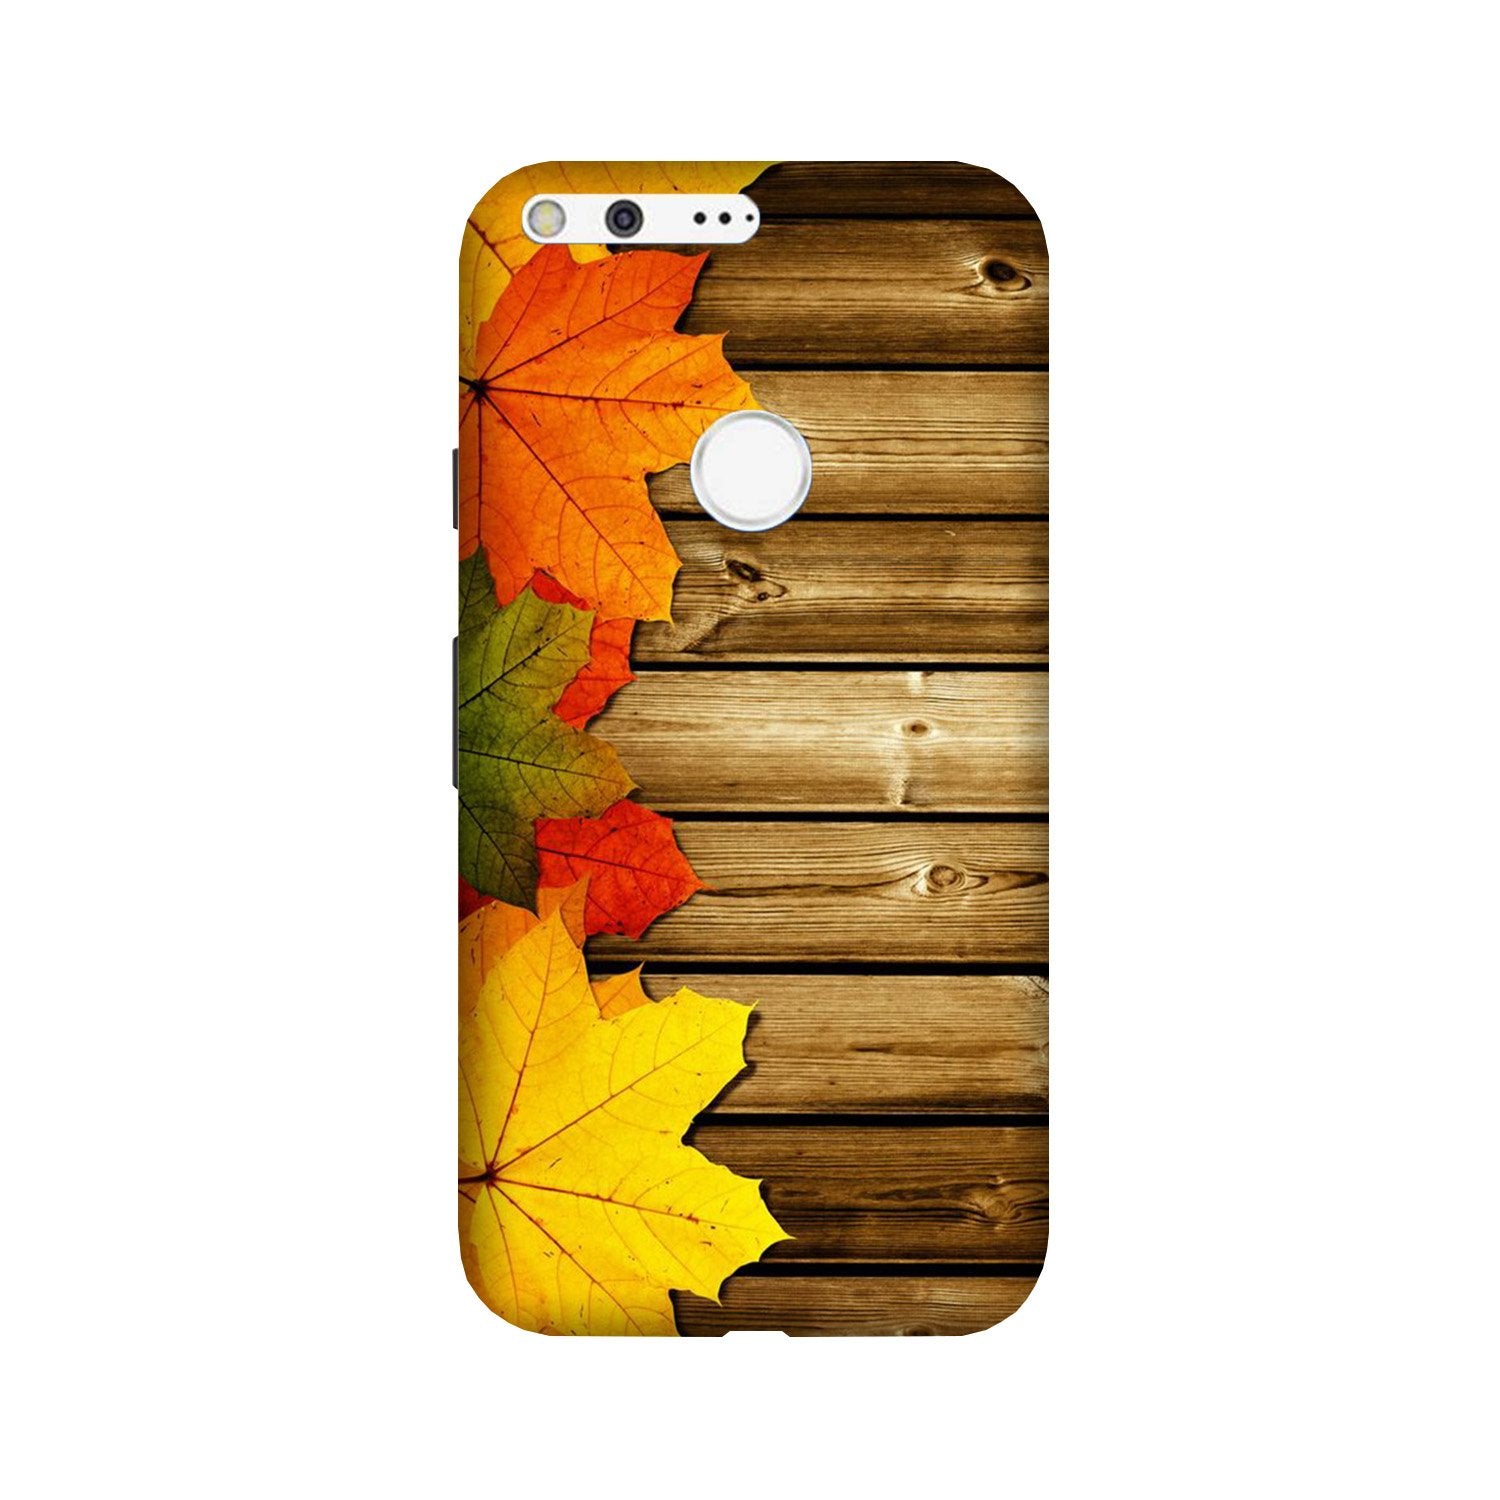 Wooden look3 Case for Google Pixel XL